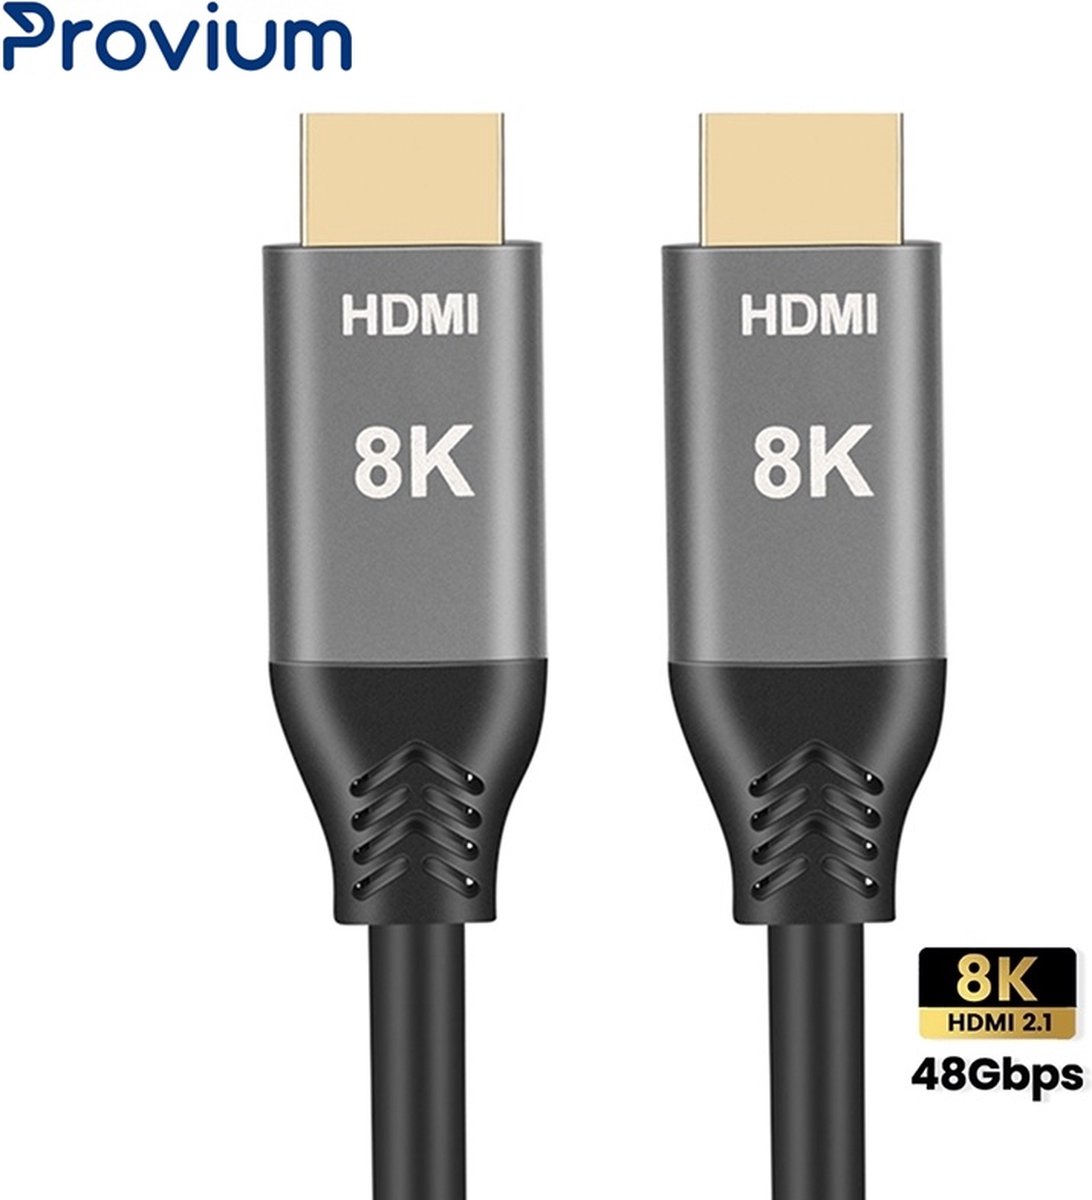 Provium - HDMI 2.1 kabel - Ultra HD 8K - HDMI naar HDMI kabel - voor o.a. PS5 en Xbox Series - 1,5 meter - zwart